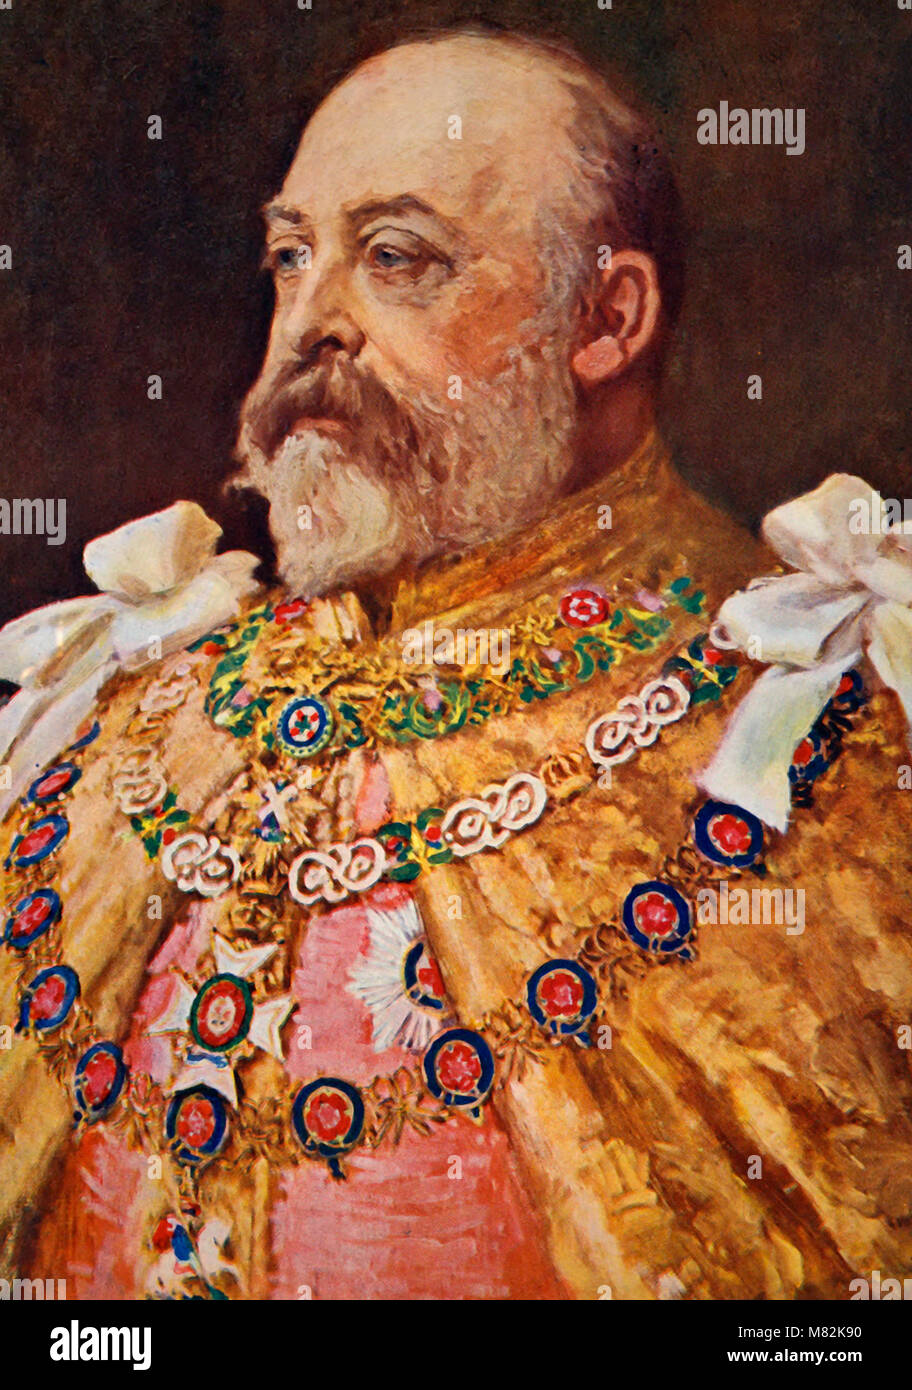 Seine Majestät König Edward VII. Stockfoto